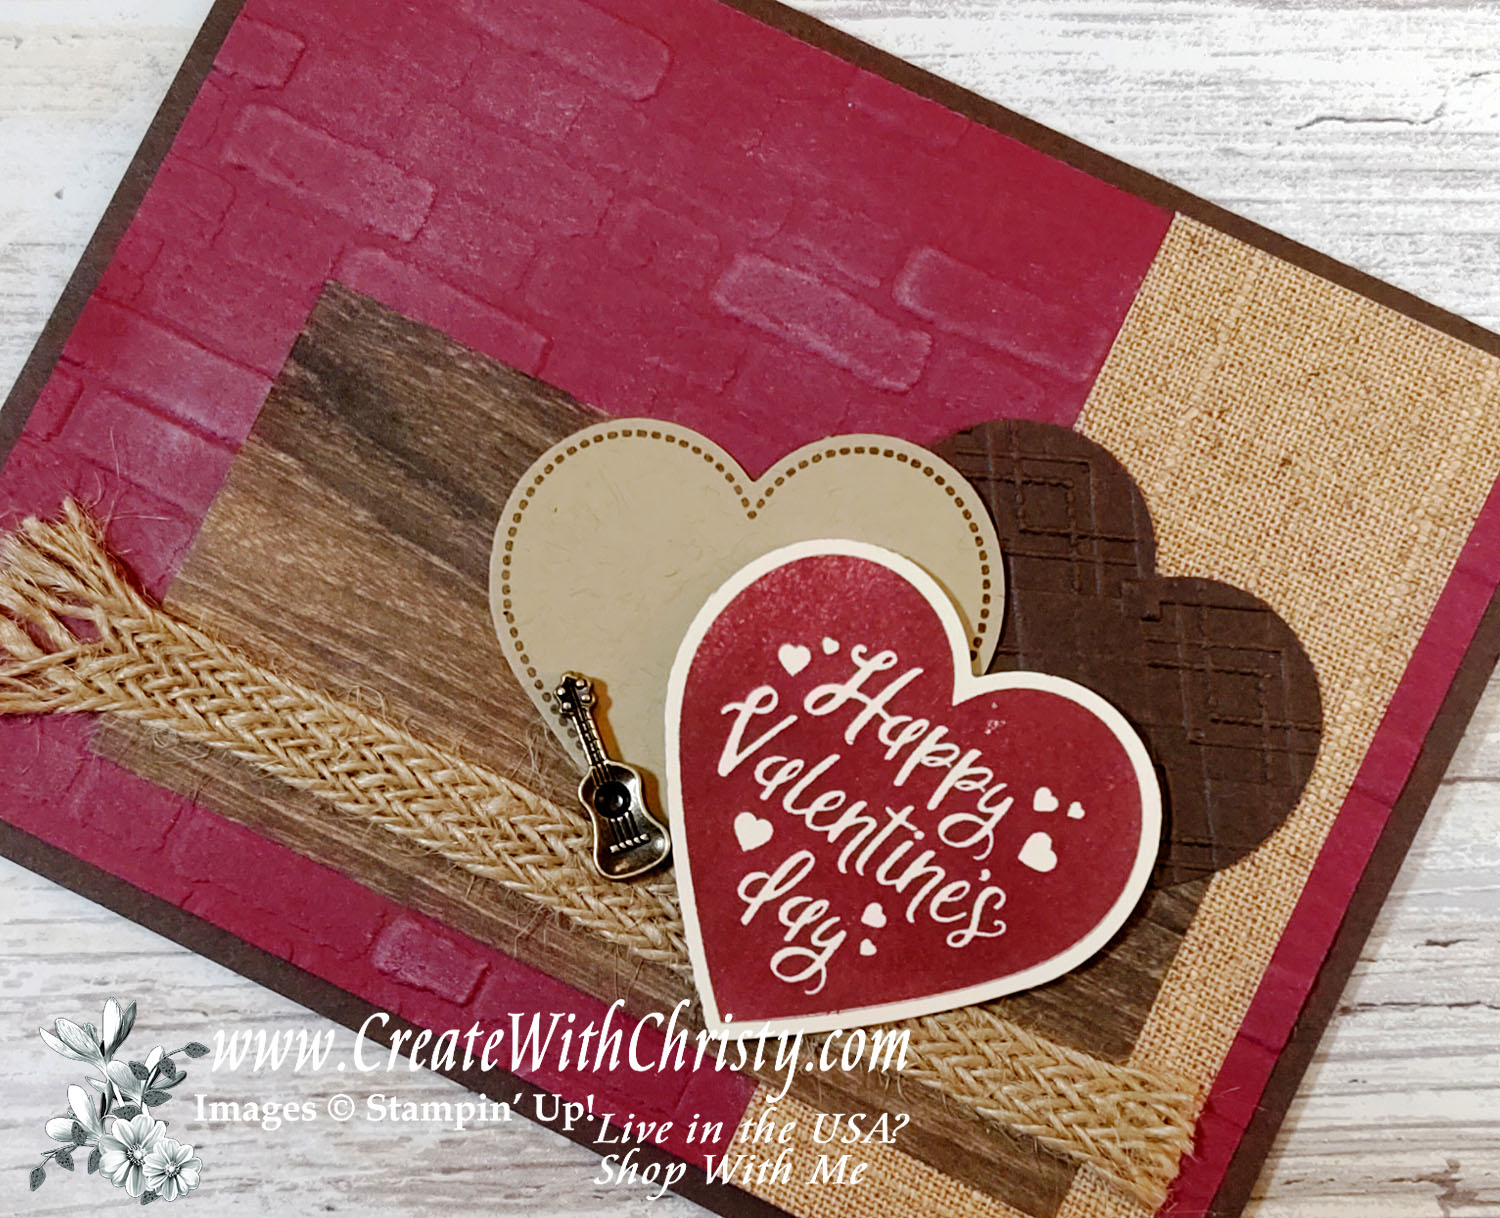 Heartfelt Valentine's Day Heart Cards